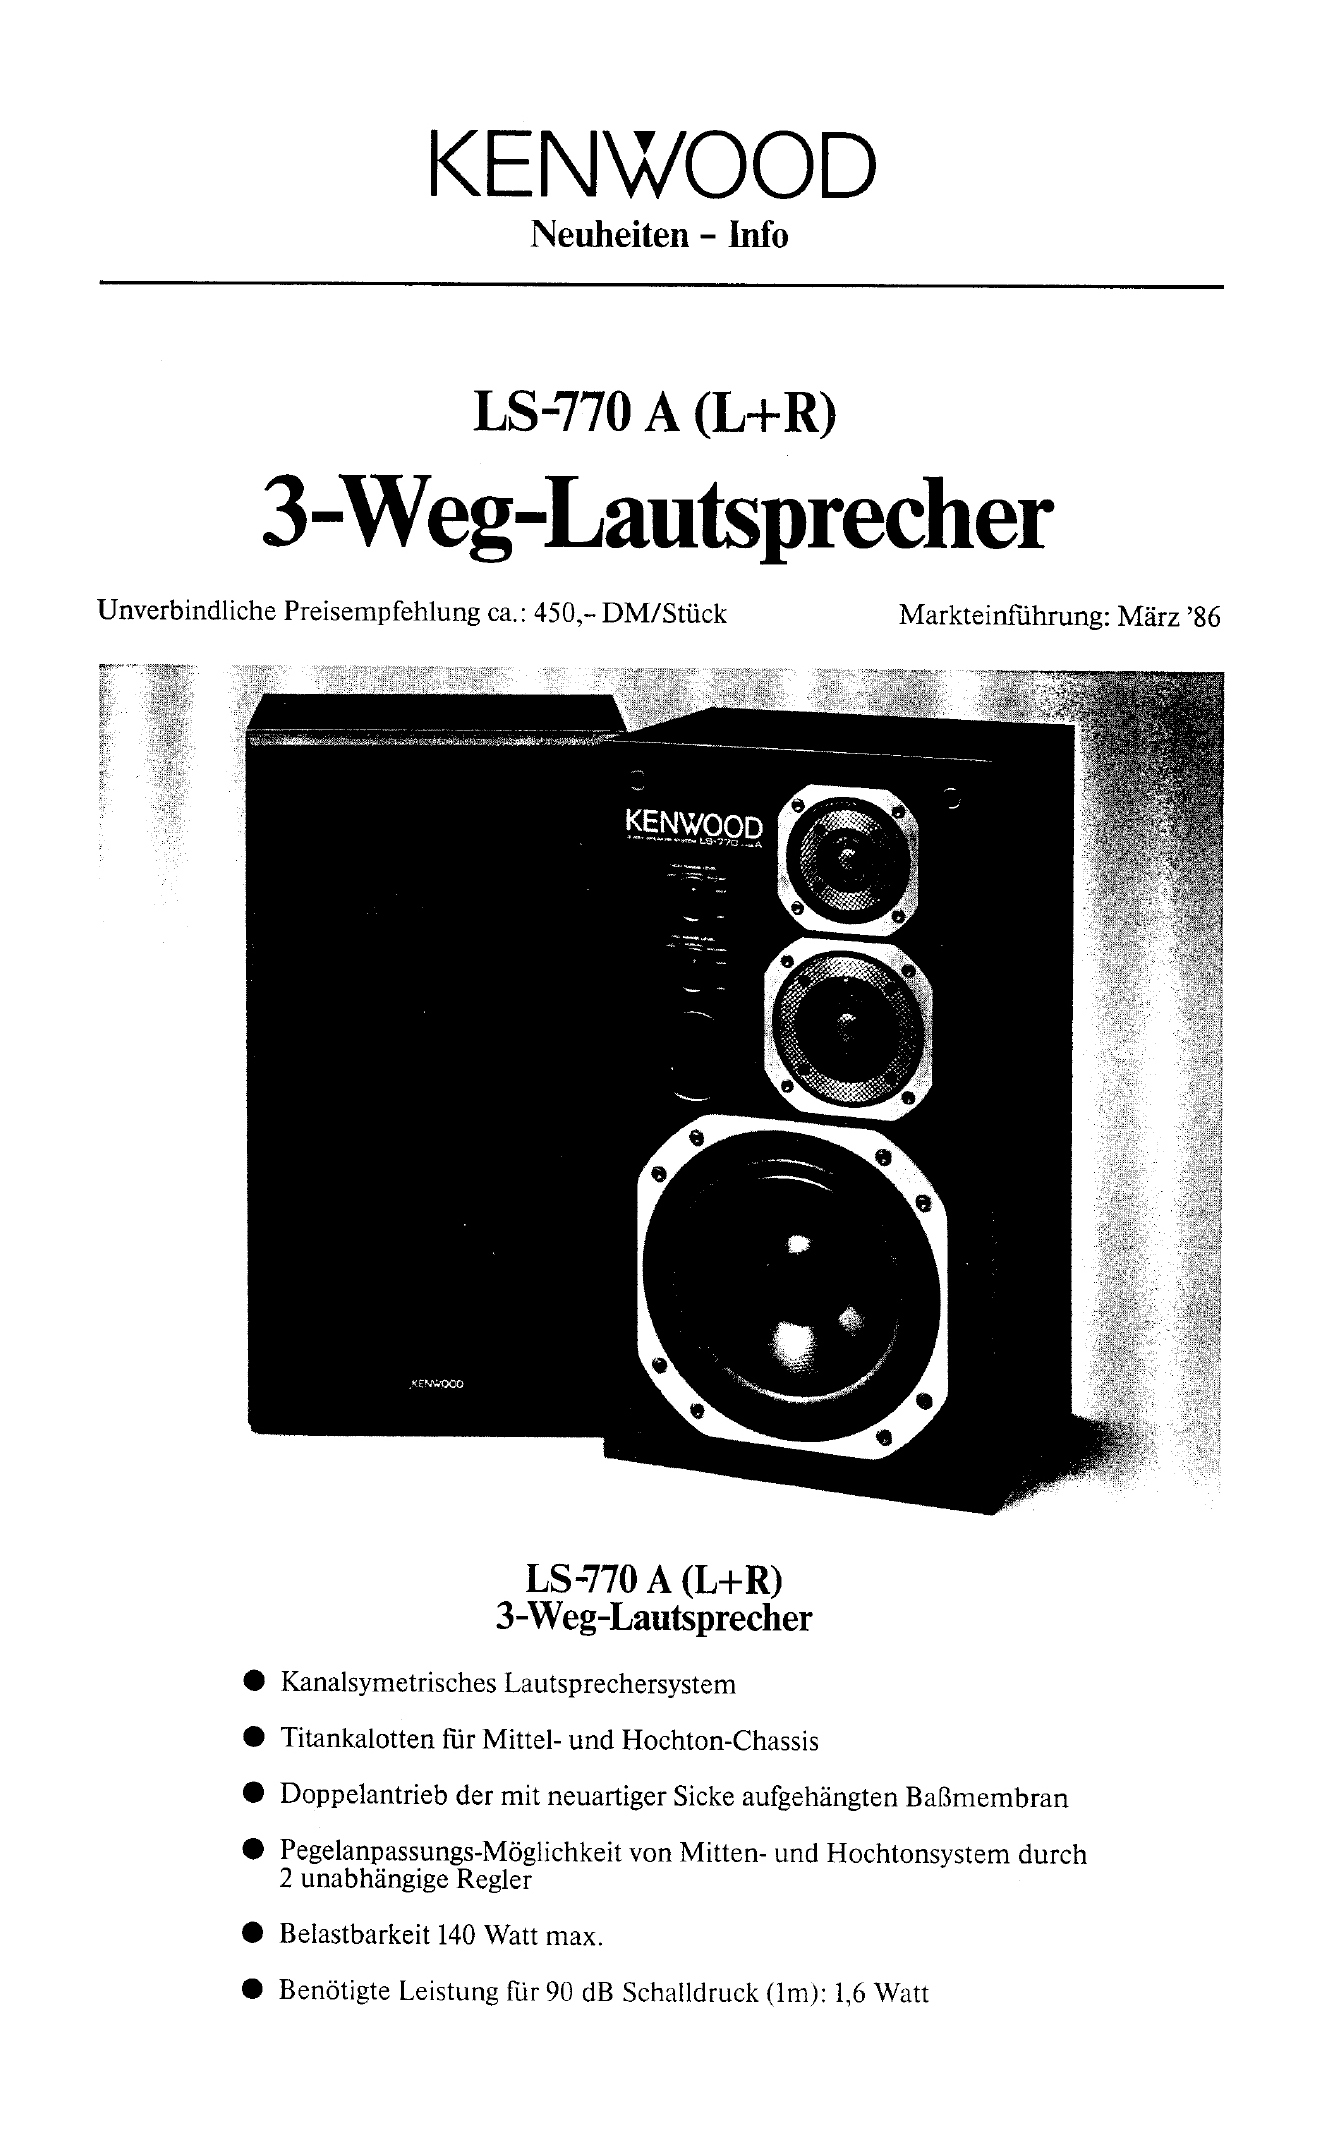 Kenwood LS-770 A-Prospekt-1986.jpg